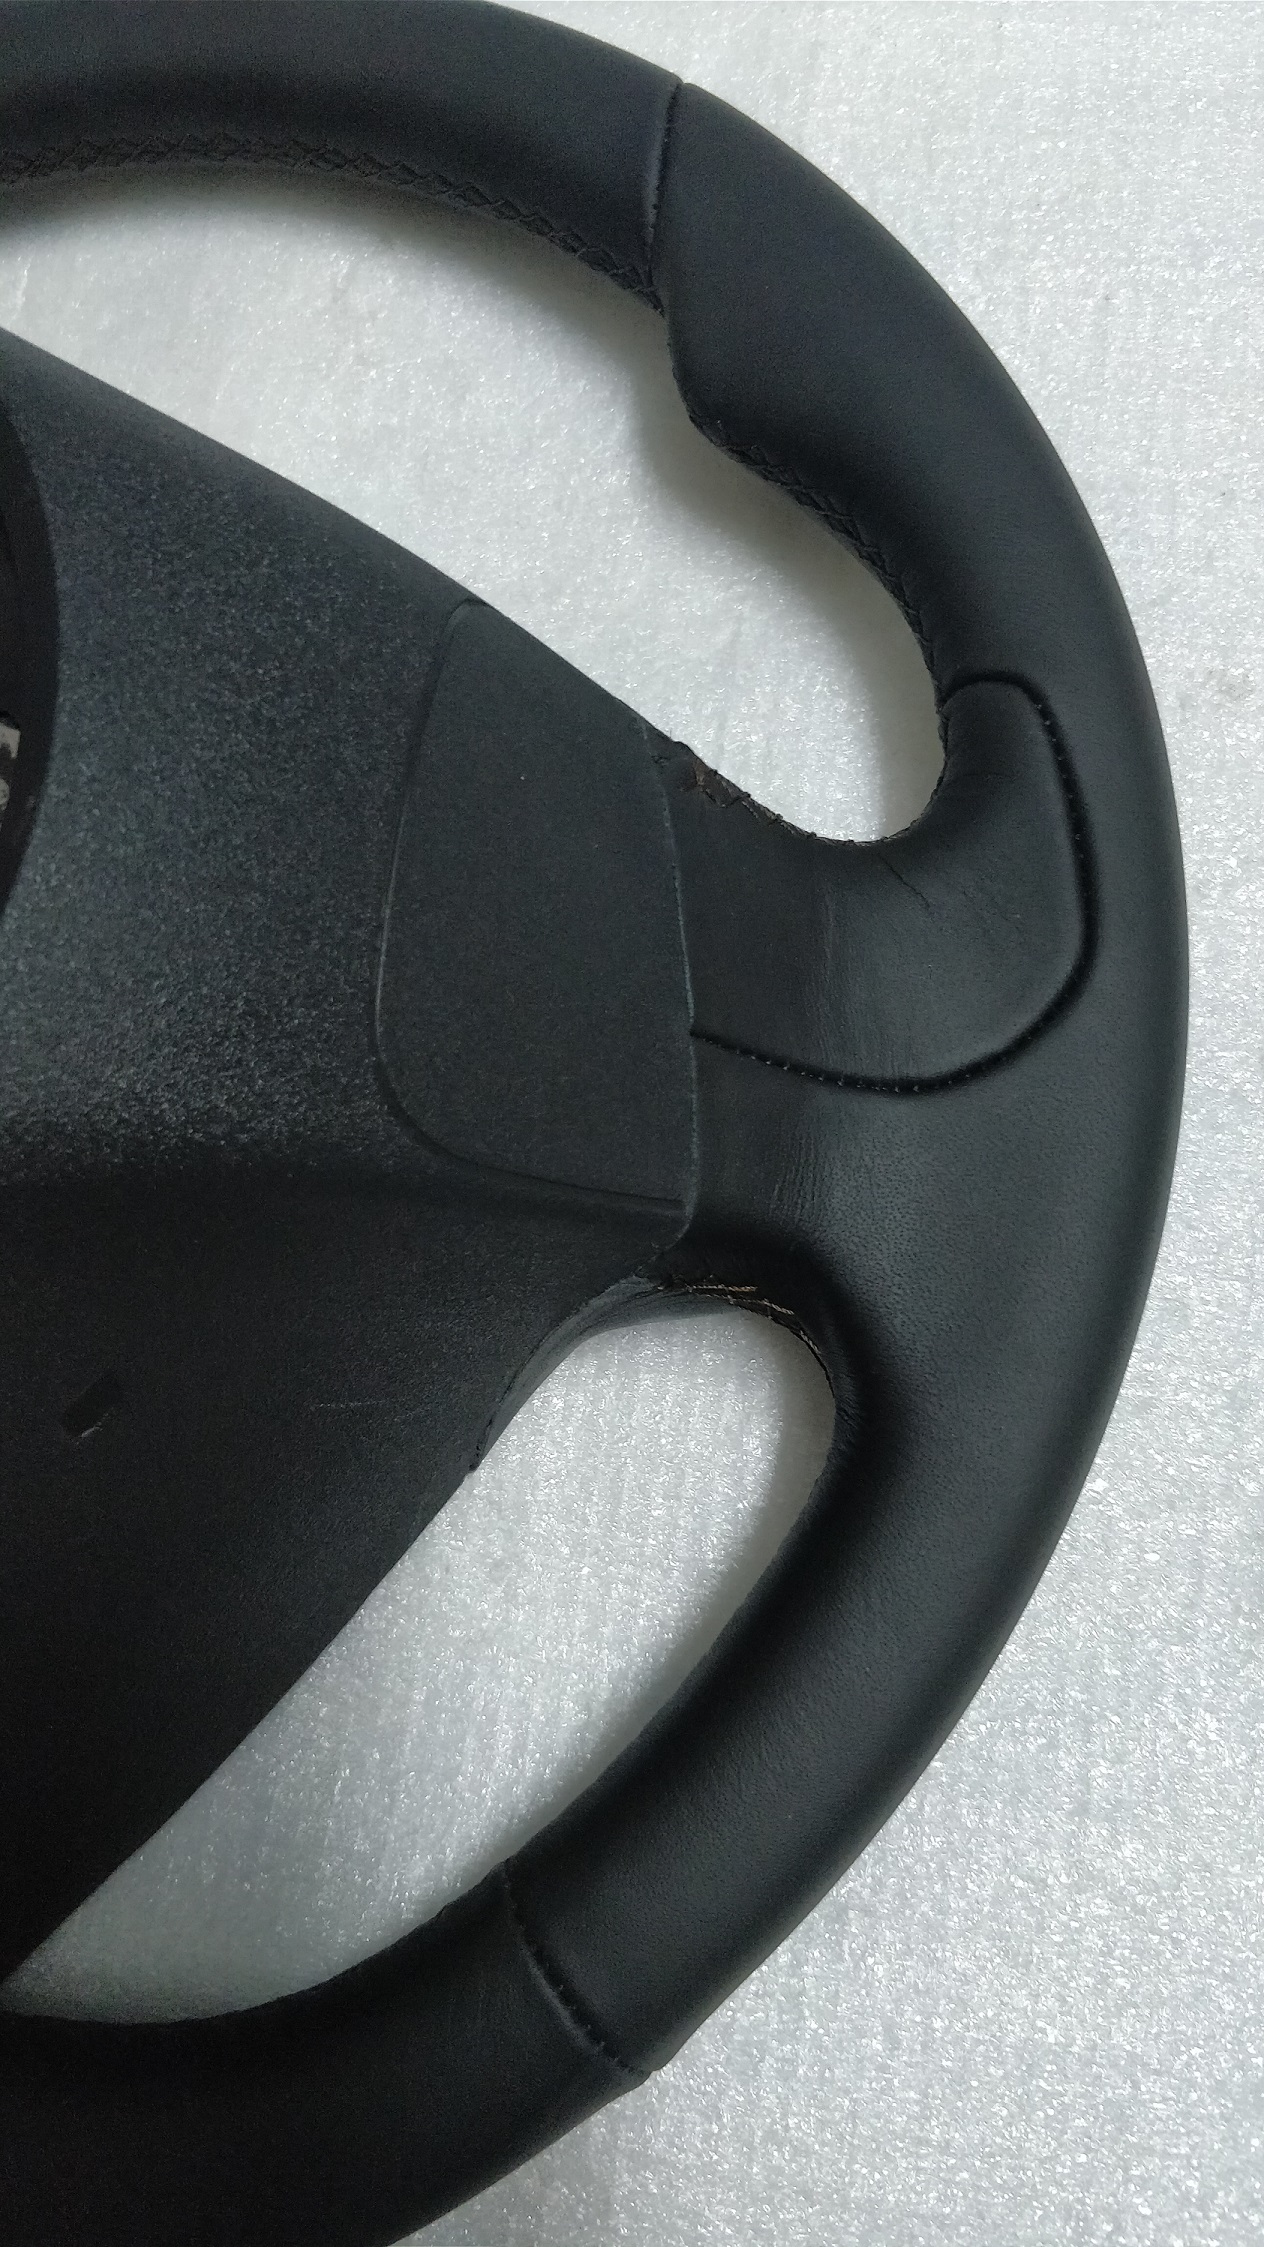 ALFA Giulietta Sport steering wheel Brown stitch Flat bottom 01561117700 New